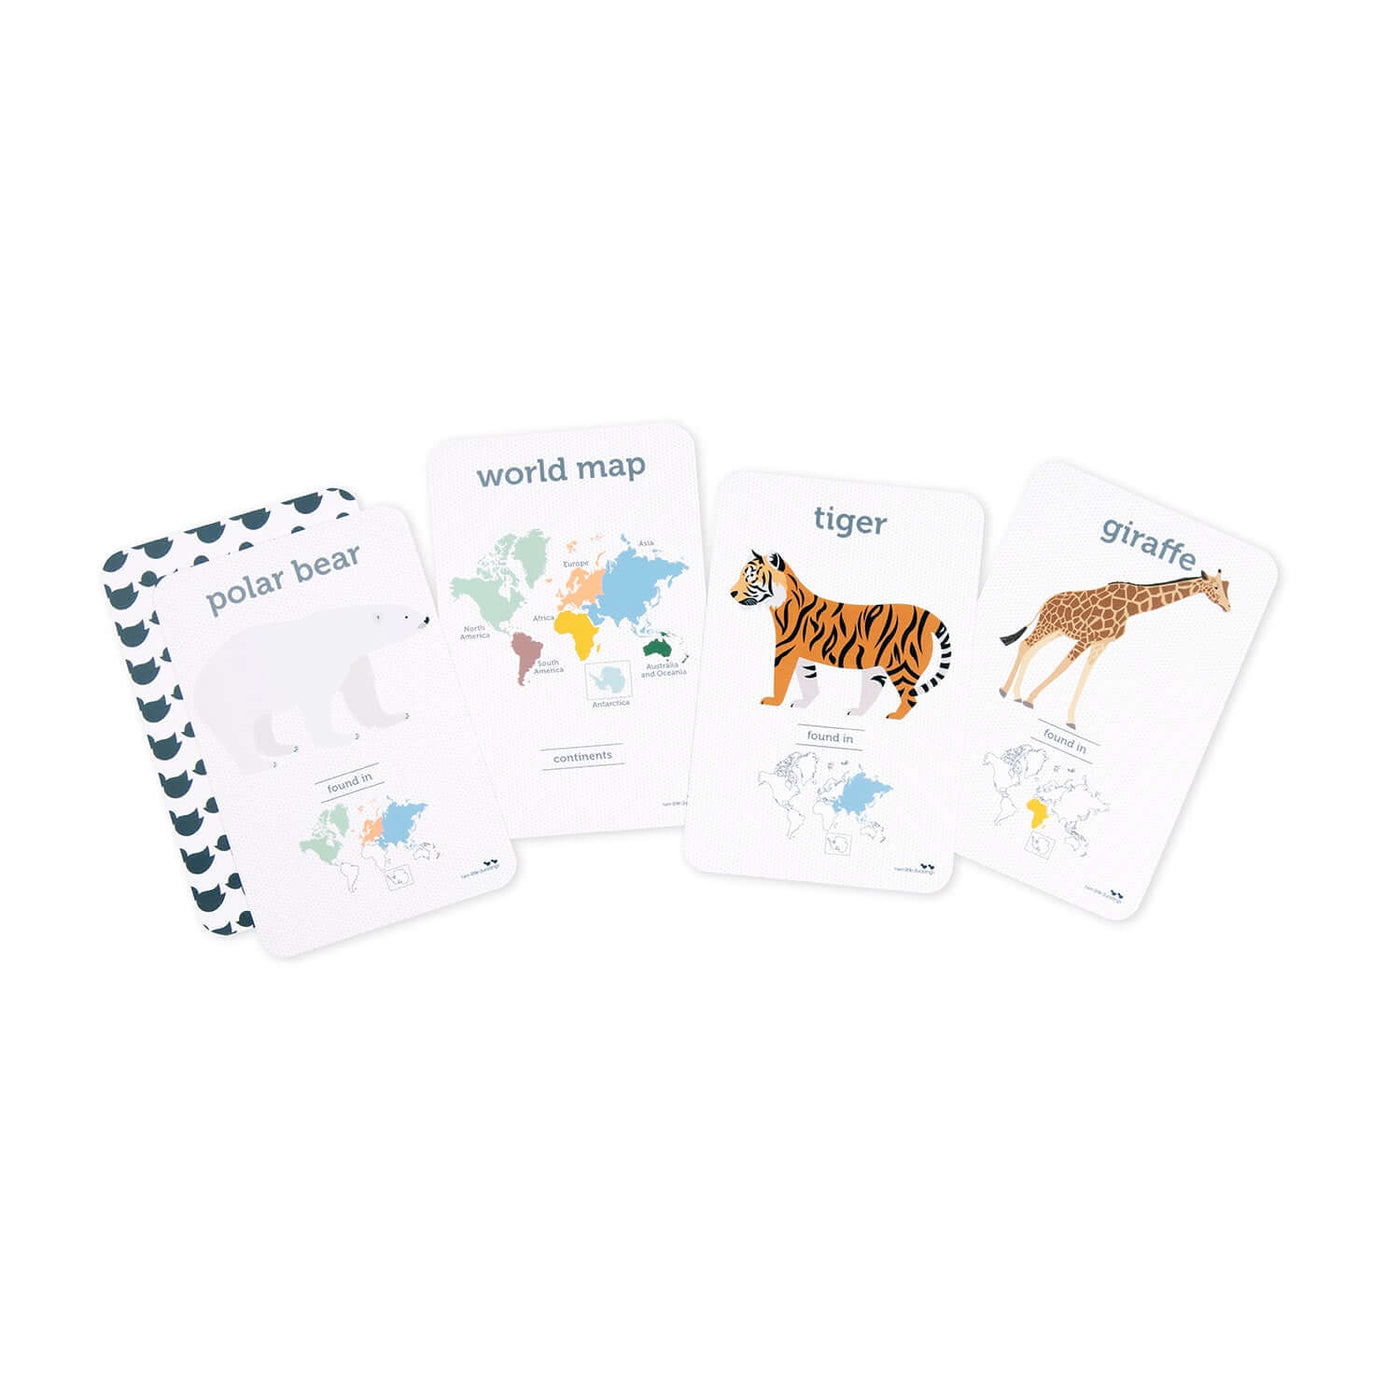 World Animal Flash Cards